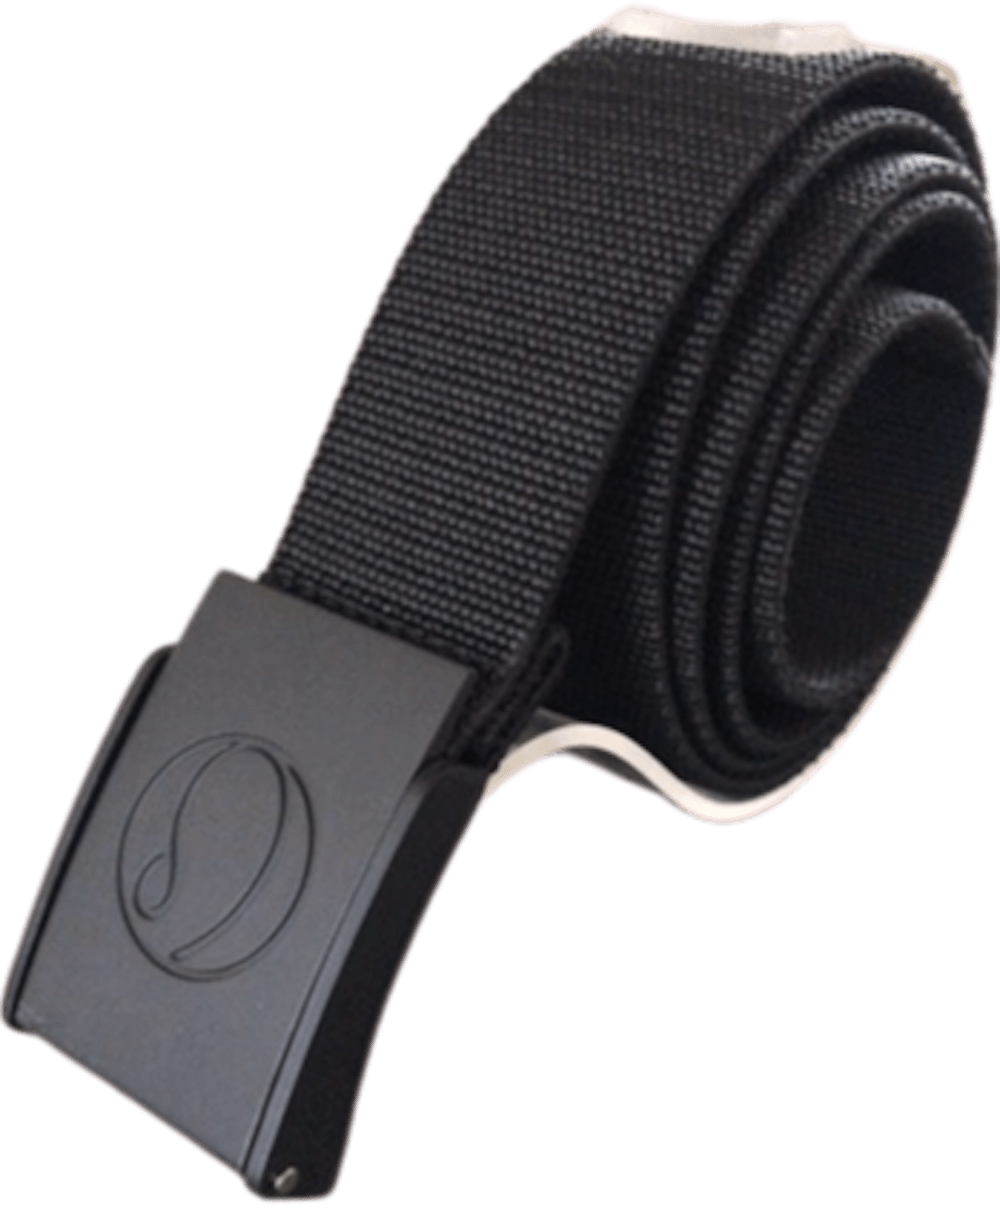 LaaTeeDa Sports Belts One Size Fits Most / Black with Black Buckle LaaTeeDa Mesh Stretch Web Belts For Women or Men - 1 1/2"W x 43” L